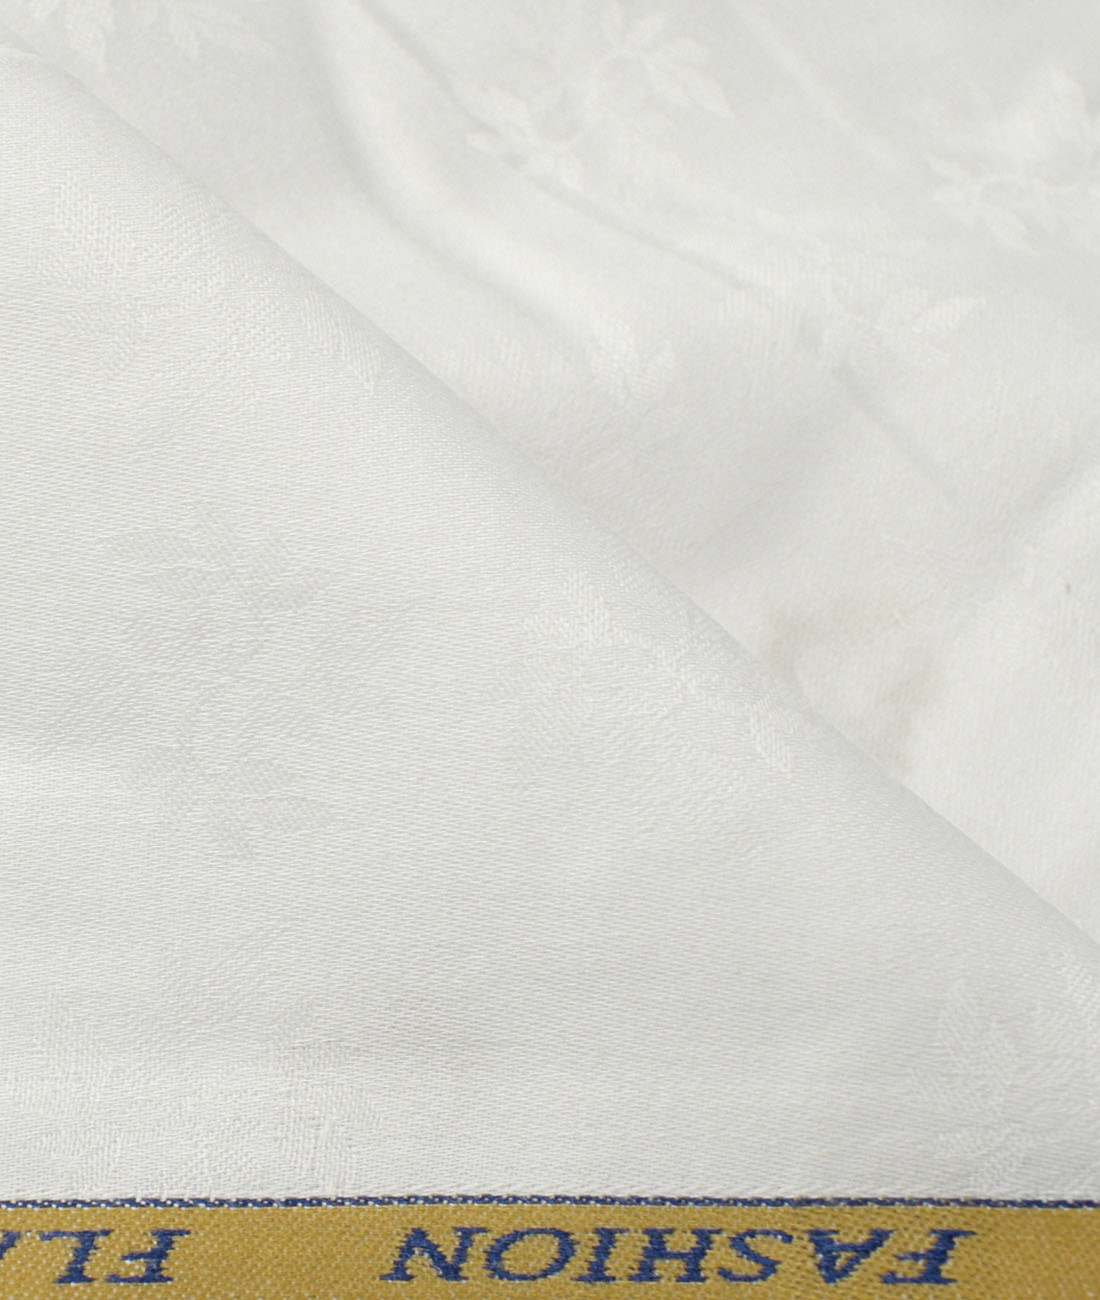 Donzito Men's Premium Cotton Self Design 2.25 Meter Unstitched Shirting Fabric (White & Brown)